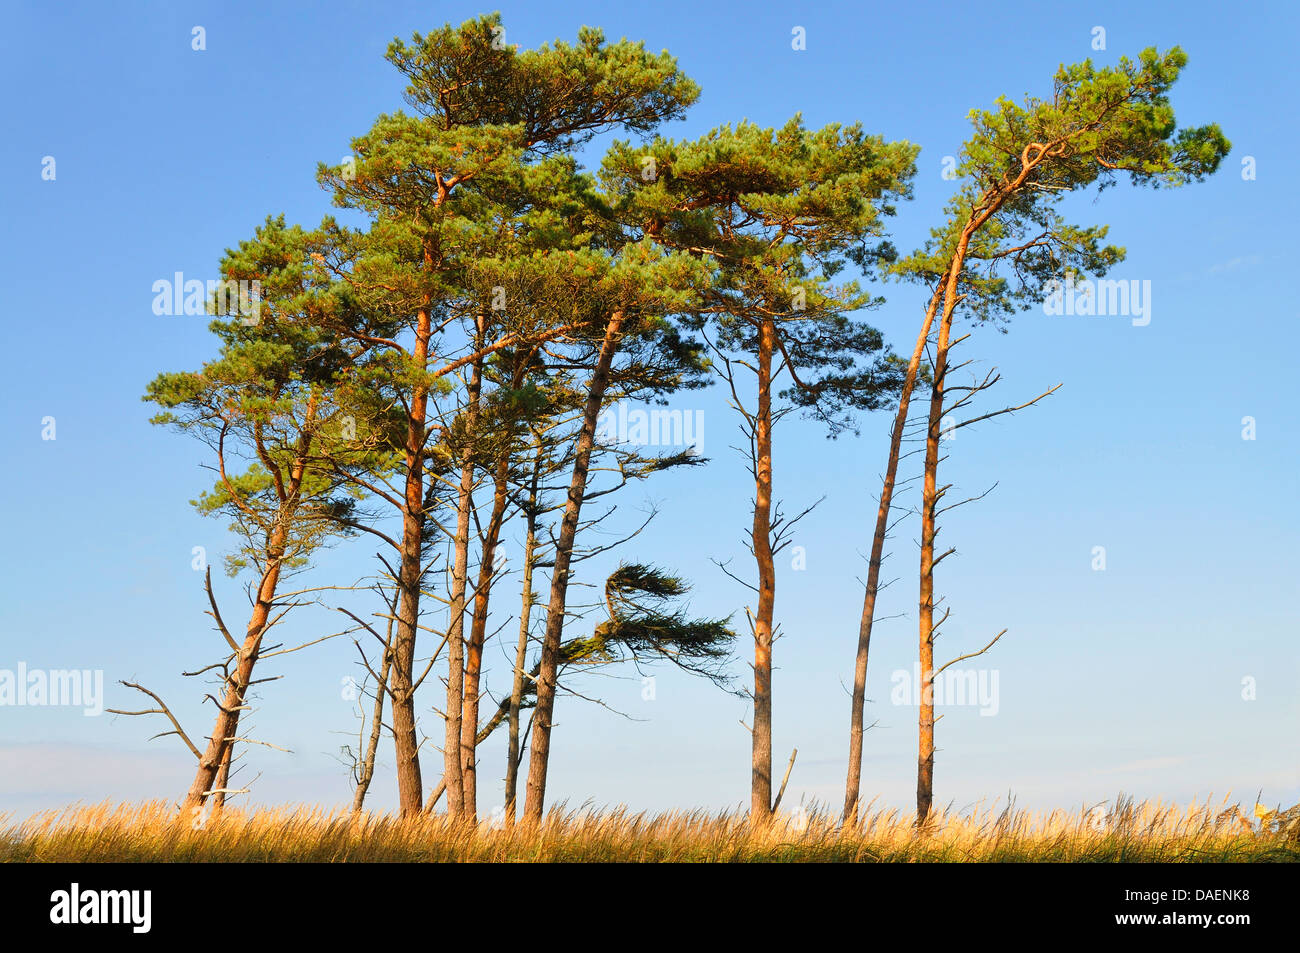 Scotch pine, Scots pine (Pinus sylvestris), group against blue sky, Germany, Mecklenburg-Western Pomerania, Western Pomerania Lagoon Area National Park Stock Photo